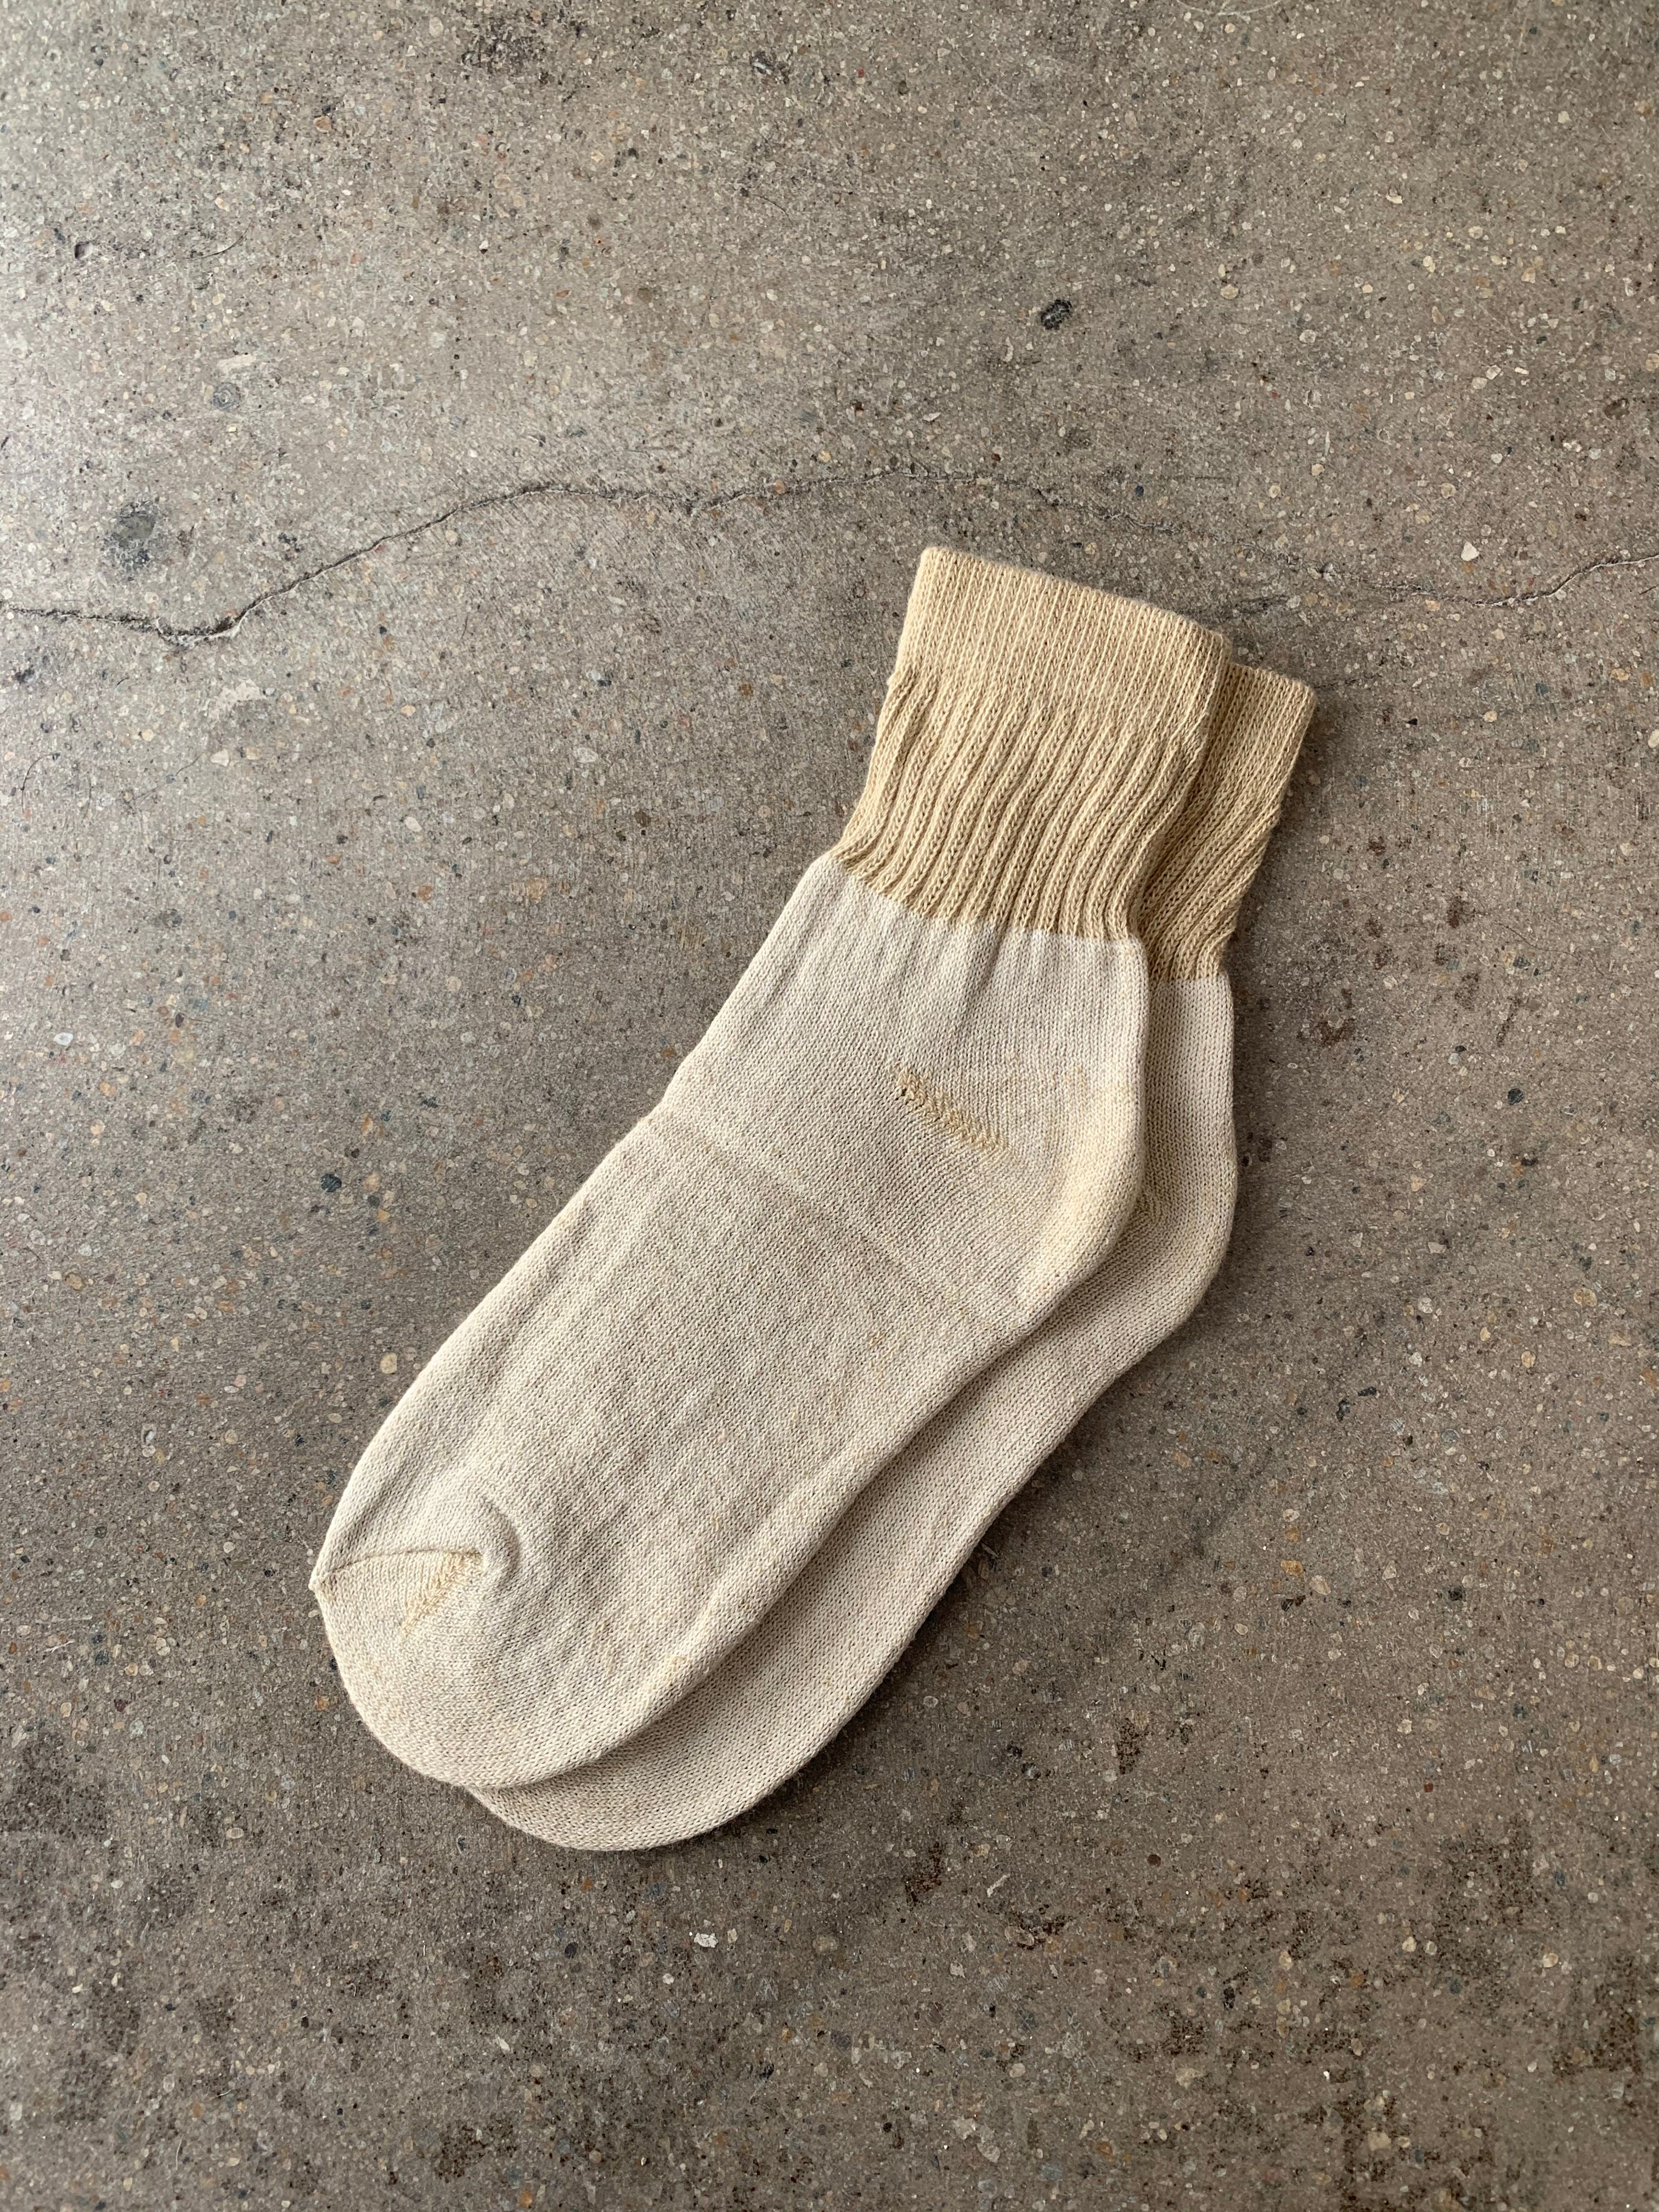 Product Image for Organic Short Top Crew Socks, Green